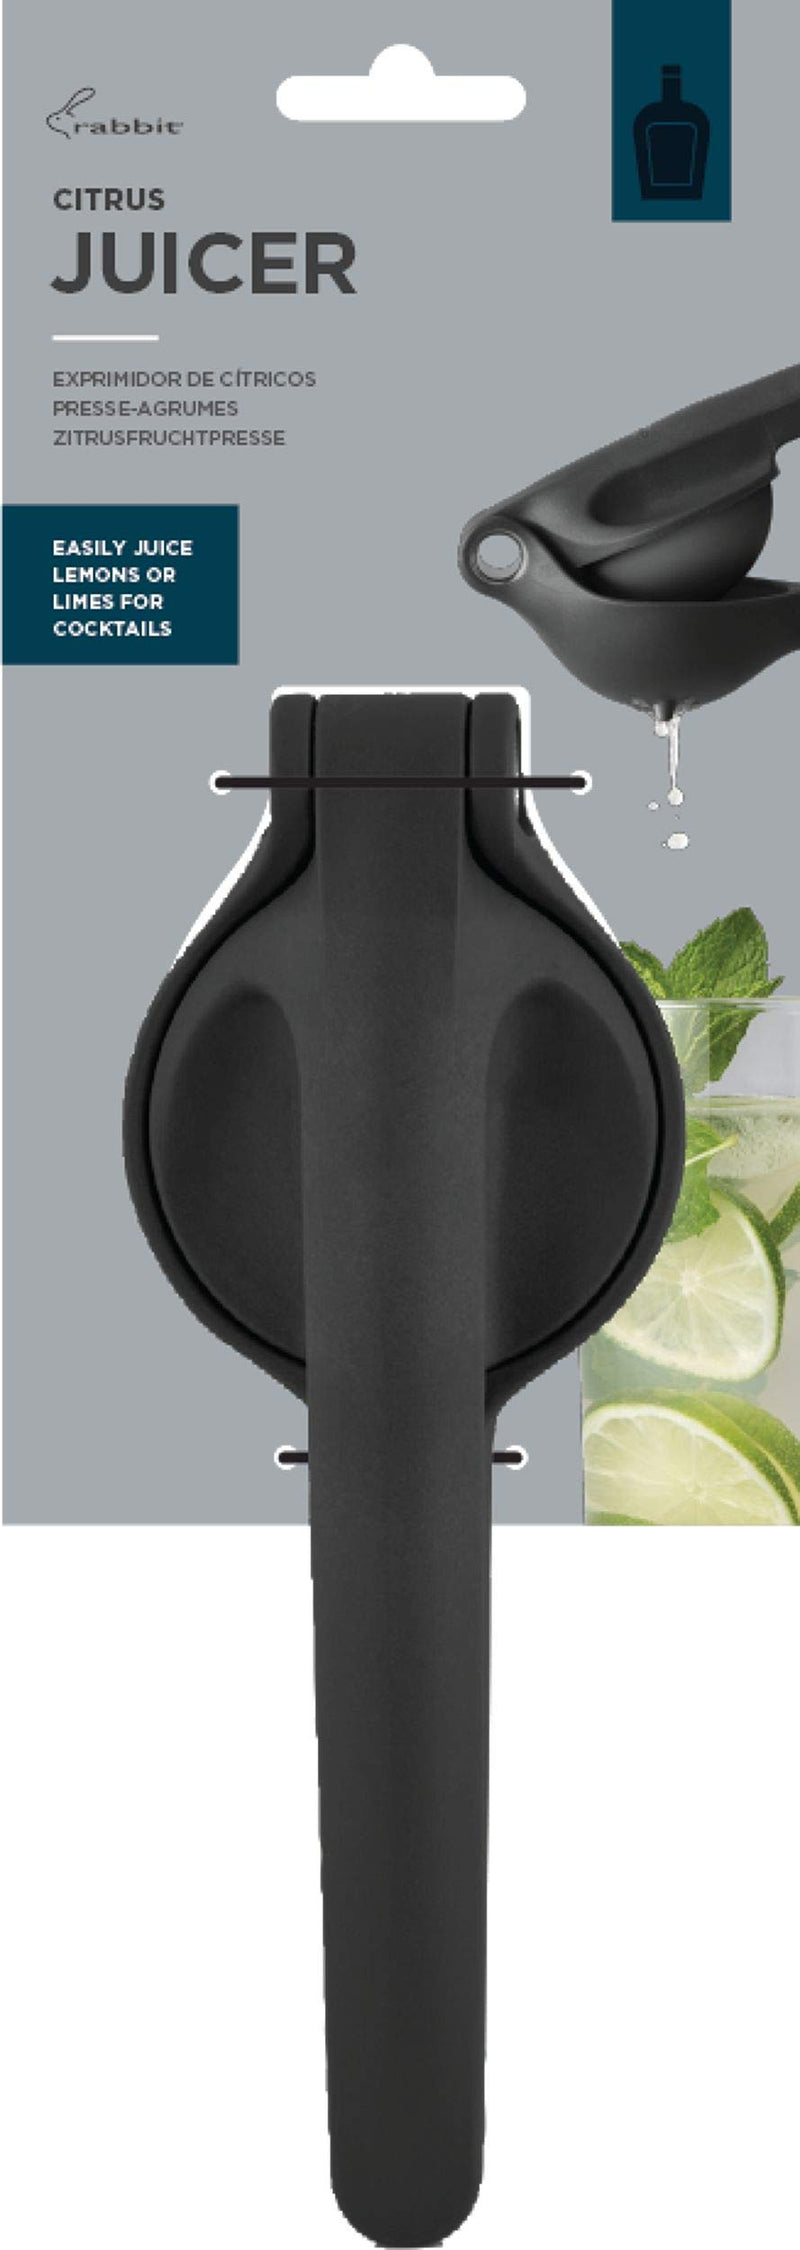  [AUSTRALIA] - Rabbit Manual Cocktail Juicer, Standard, Black